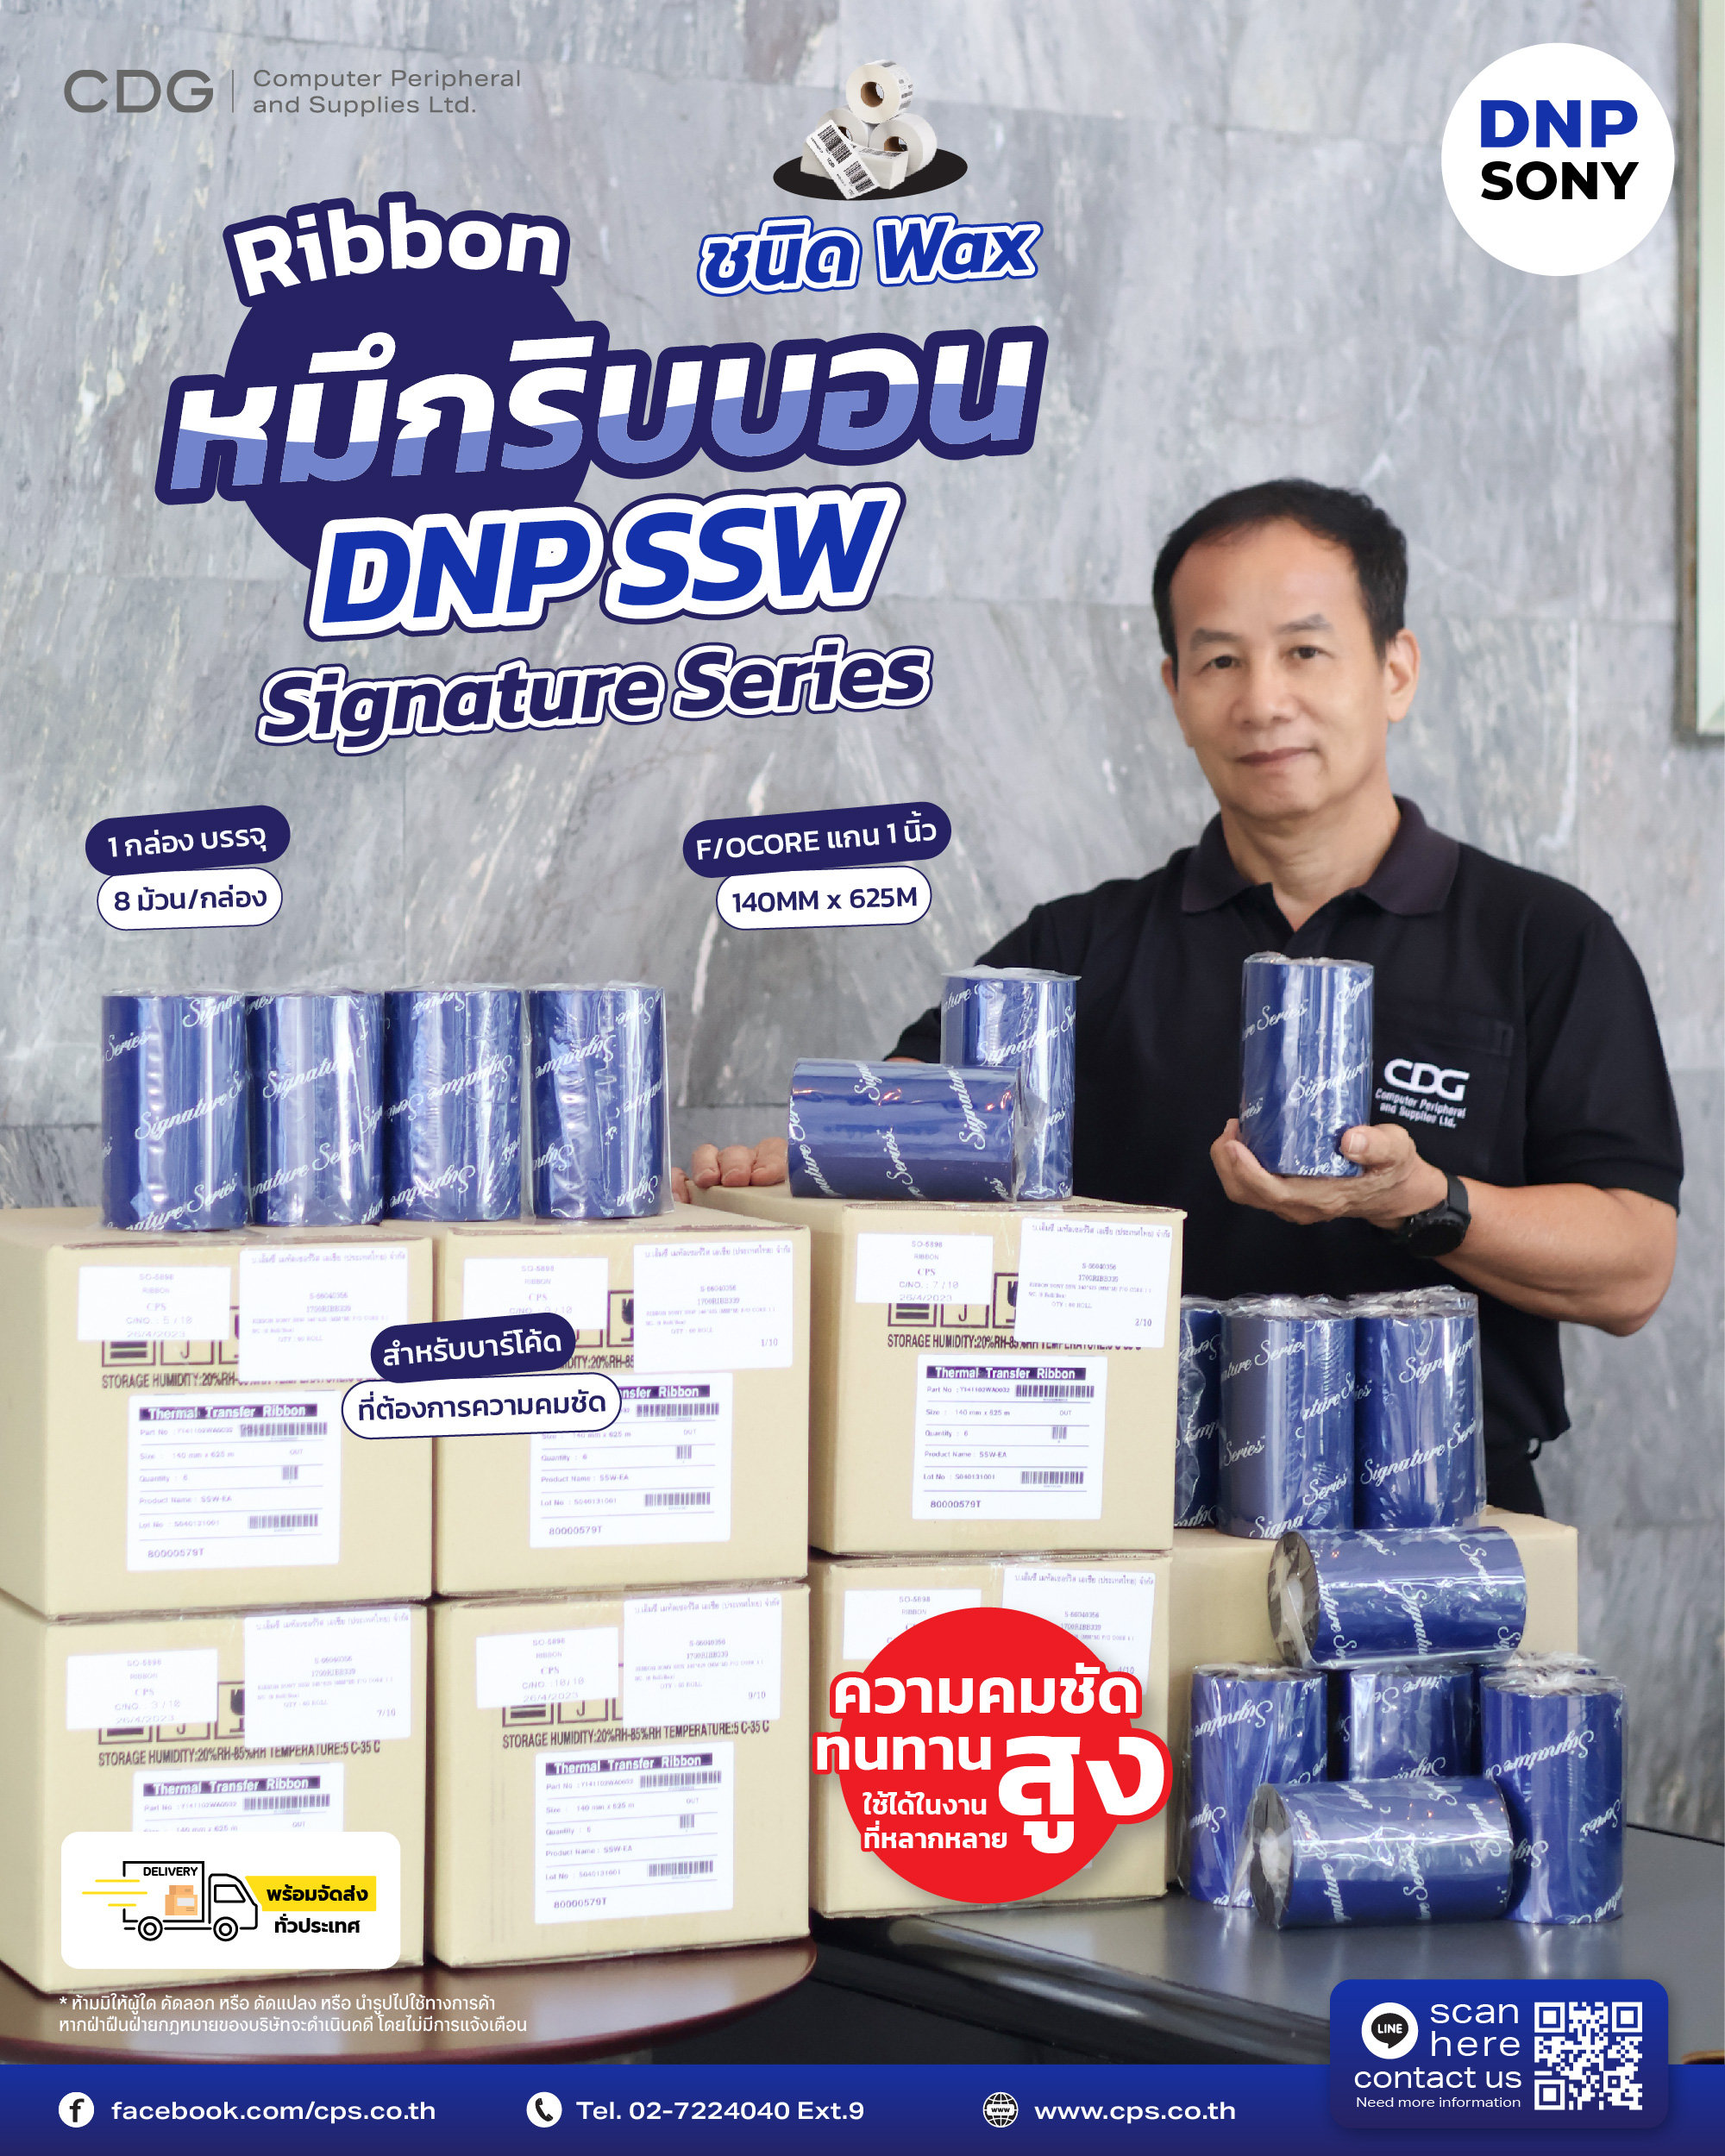 DNP SONY SSW Signature Series Wax Ribbon